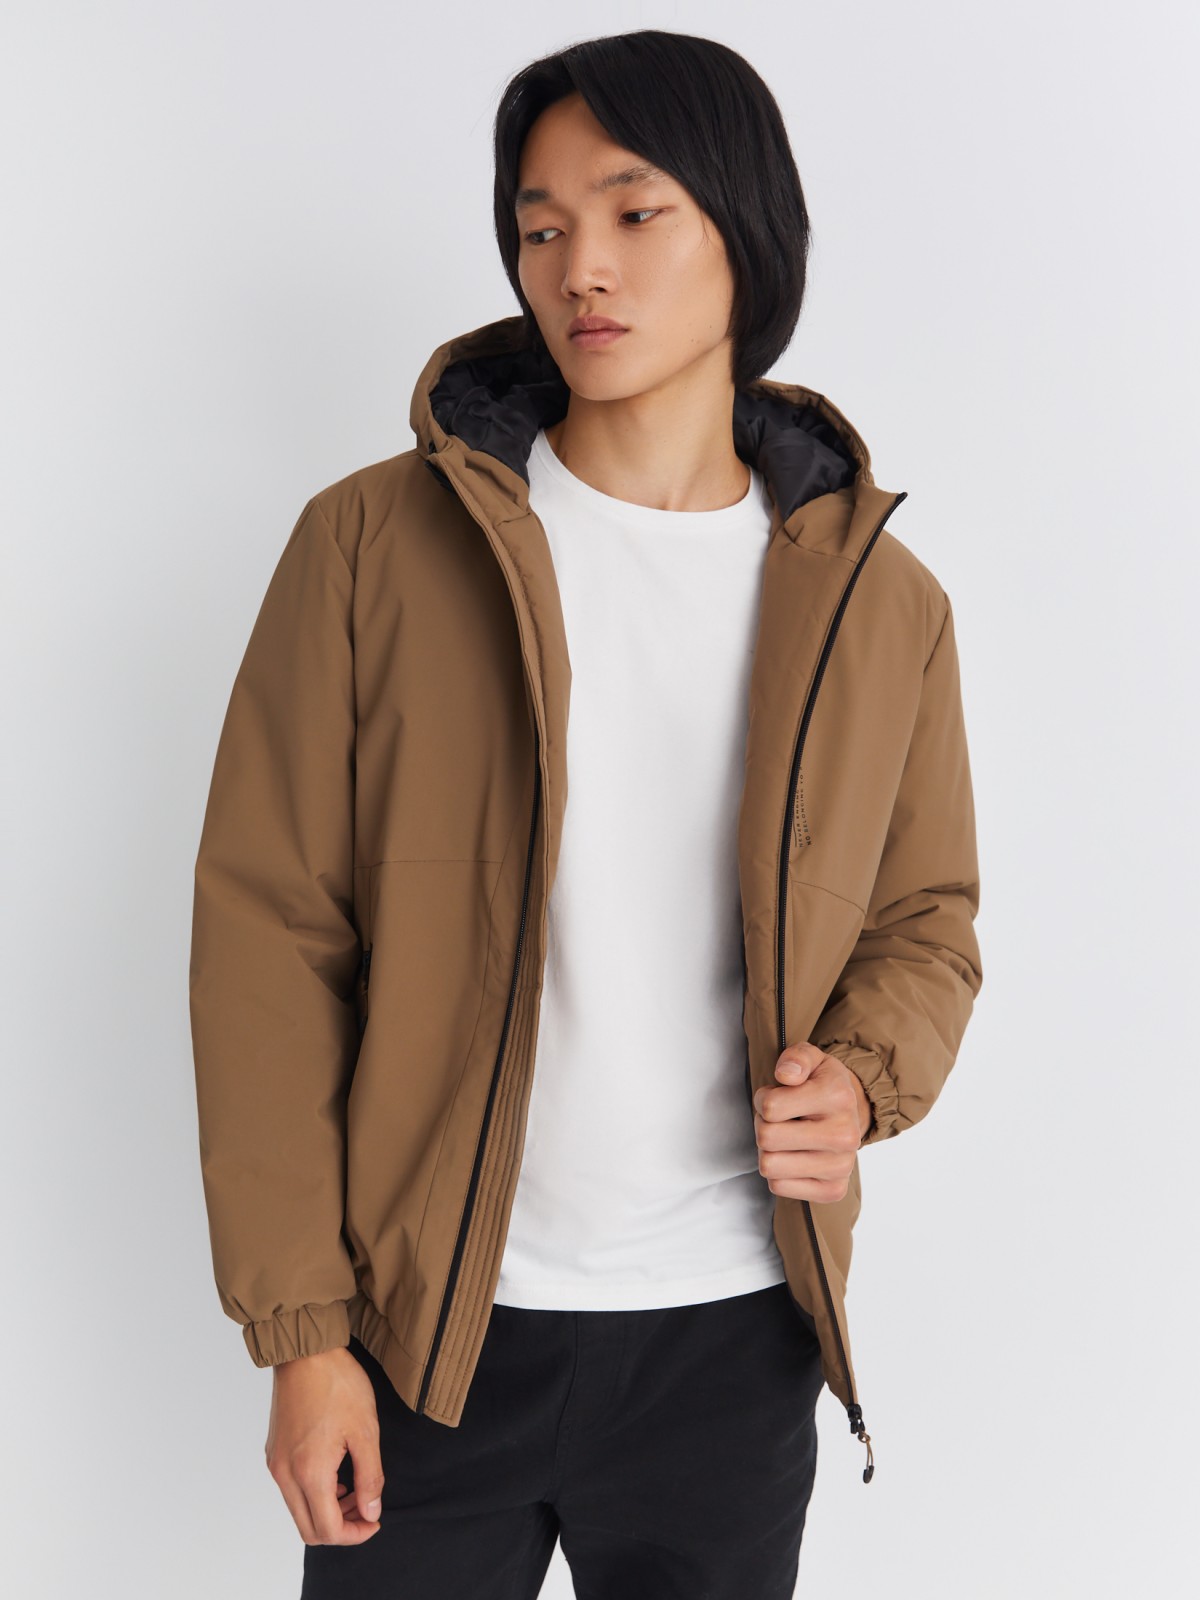 Утеплённая куртка-бомбер на синтепоне с капюшоном zolla 013345102224, цвет коричневый, размер S